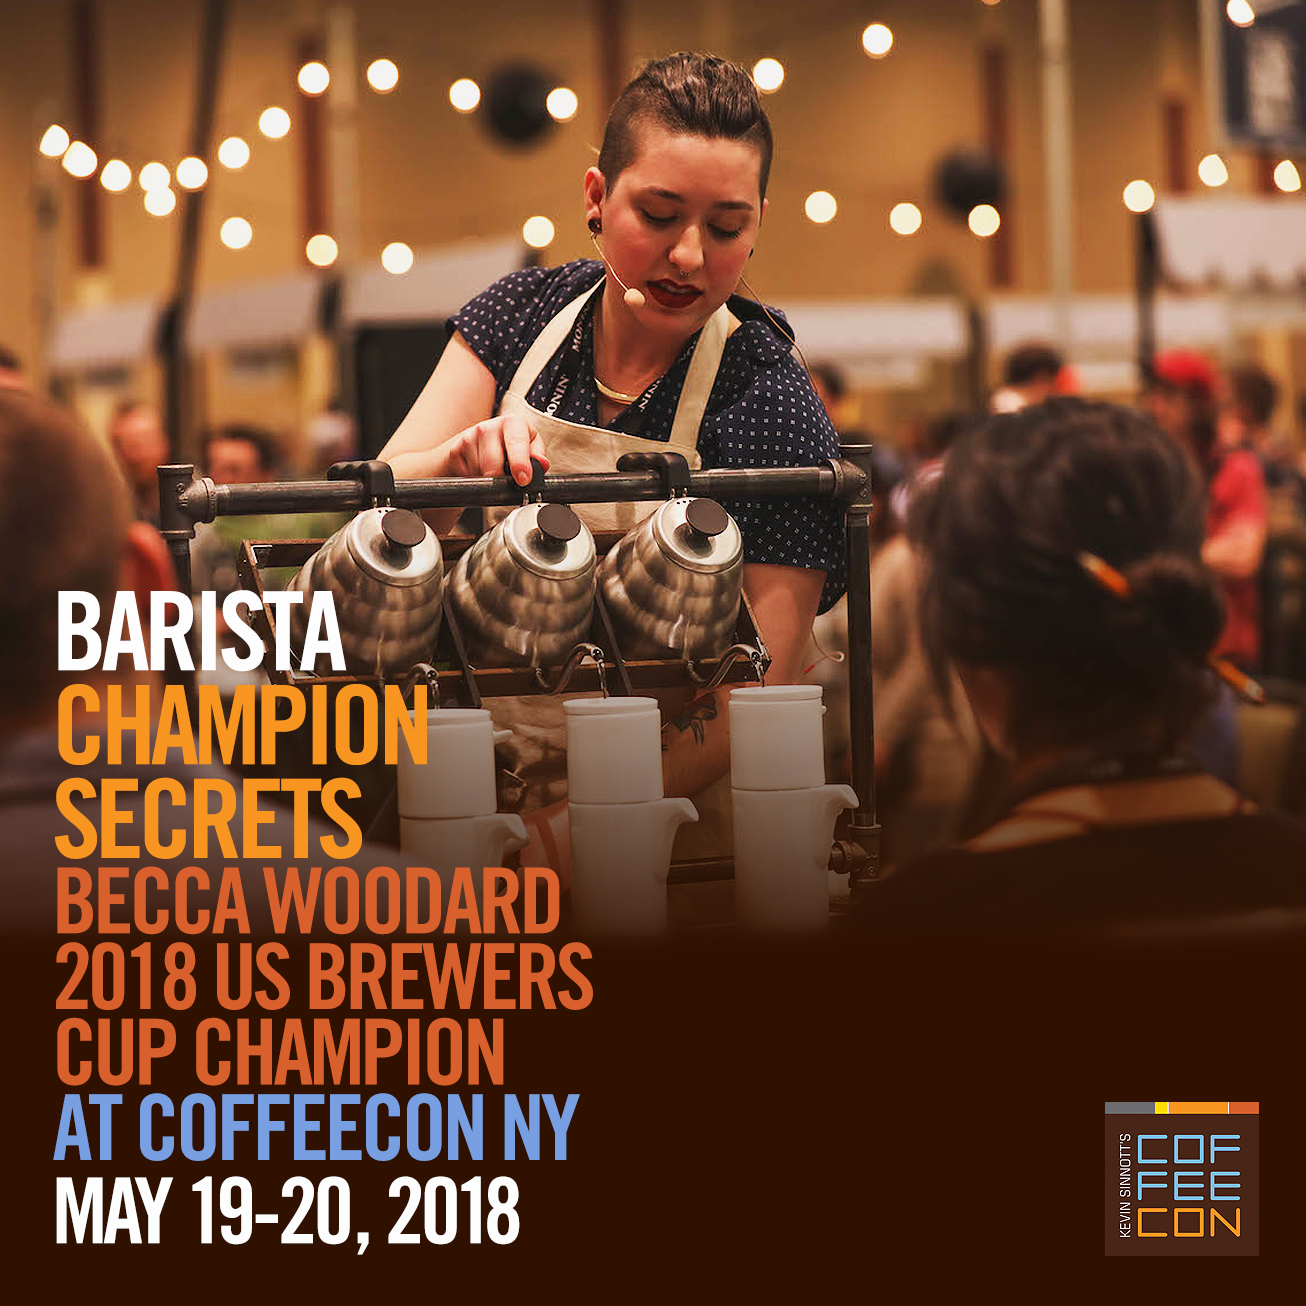 Barista Champion Secrets with Becca Woodard at CoffeeConNY